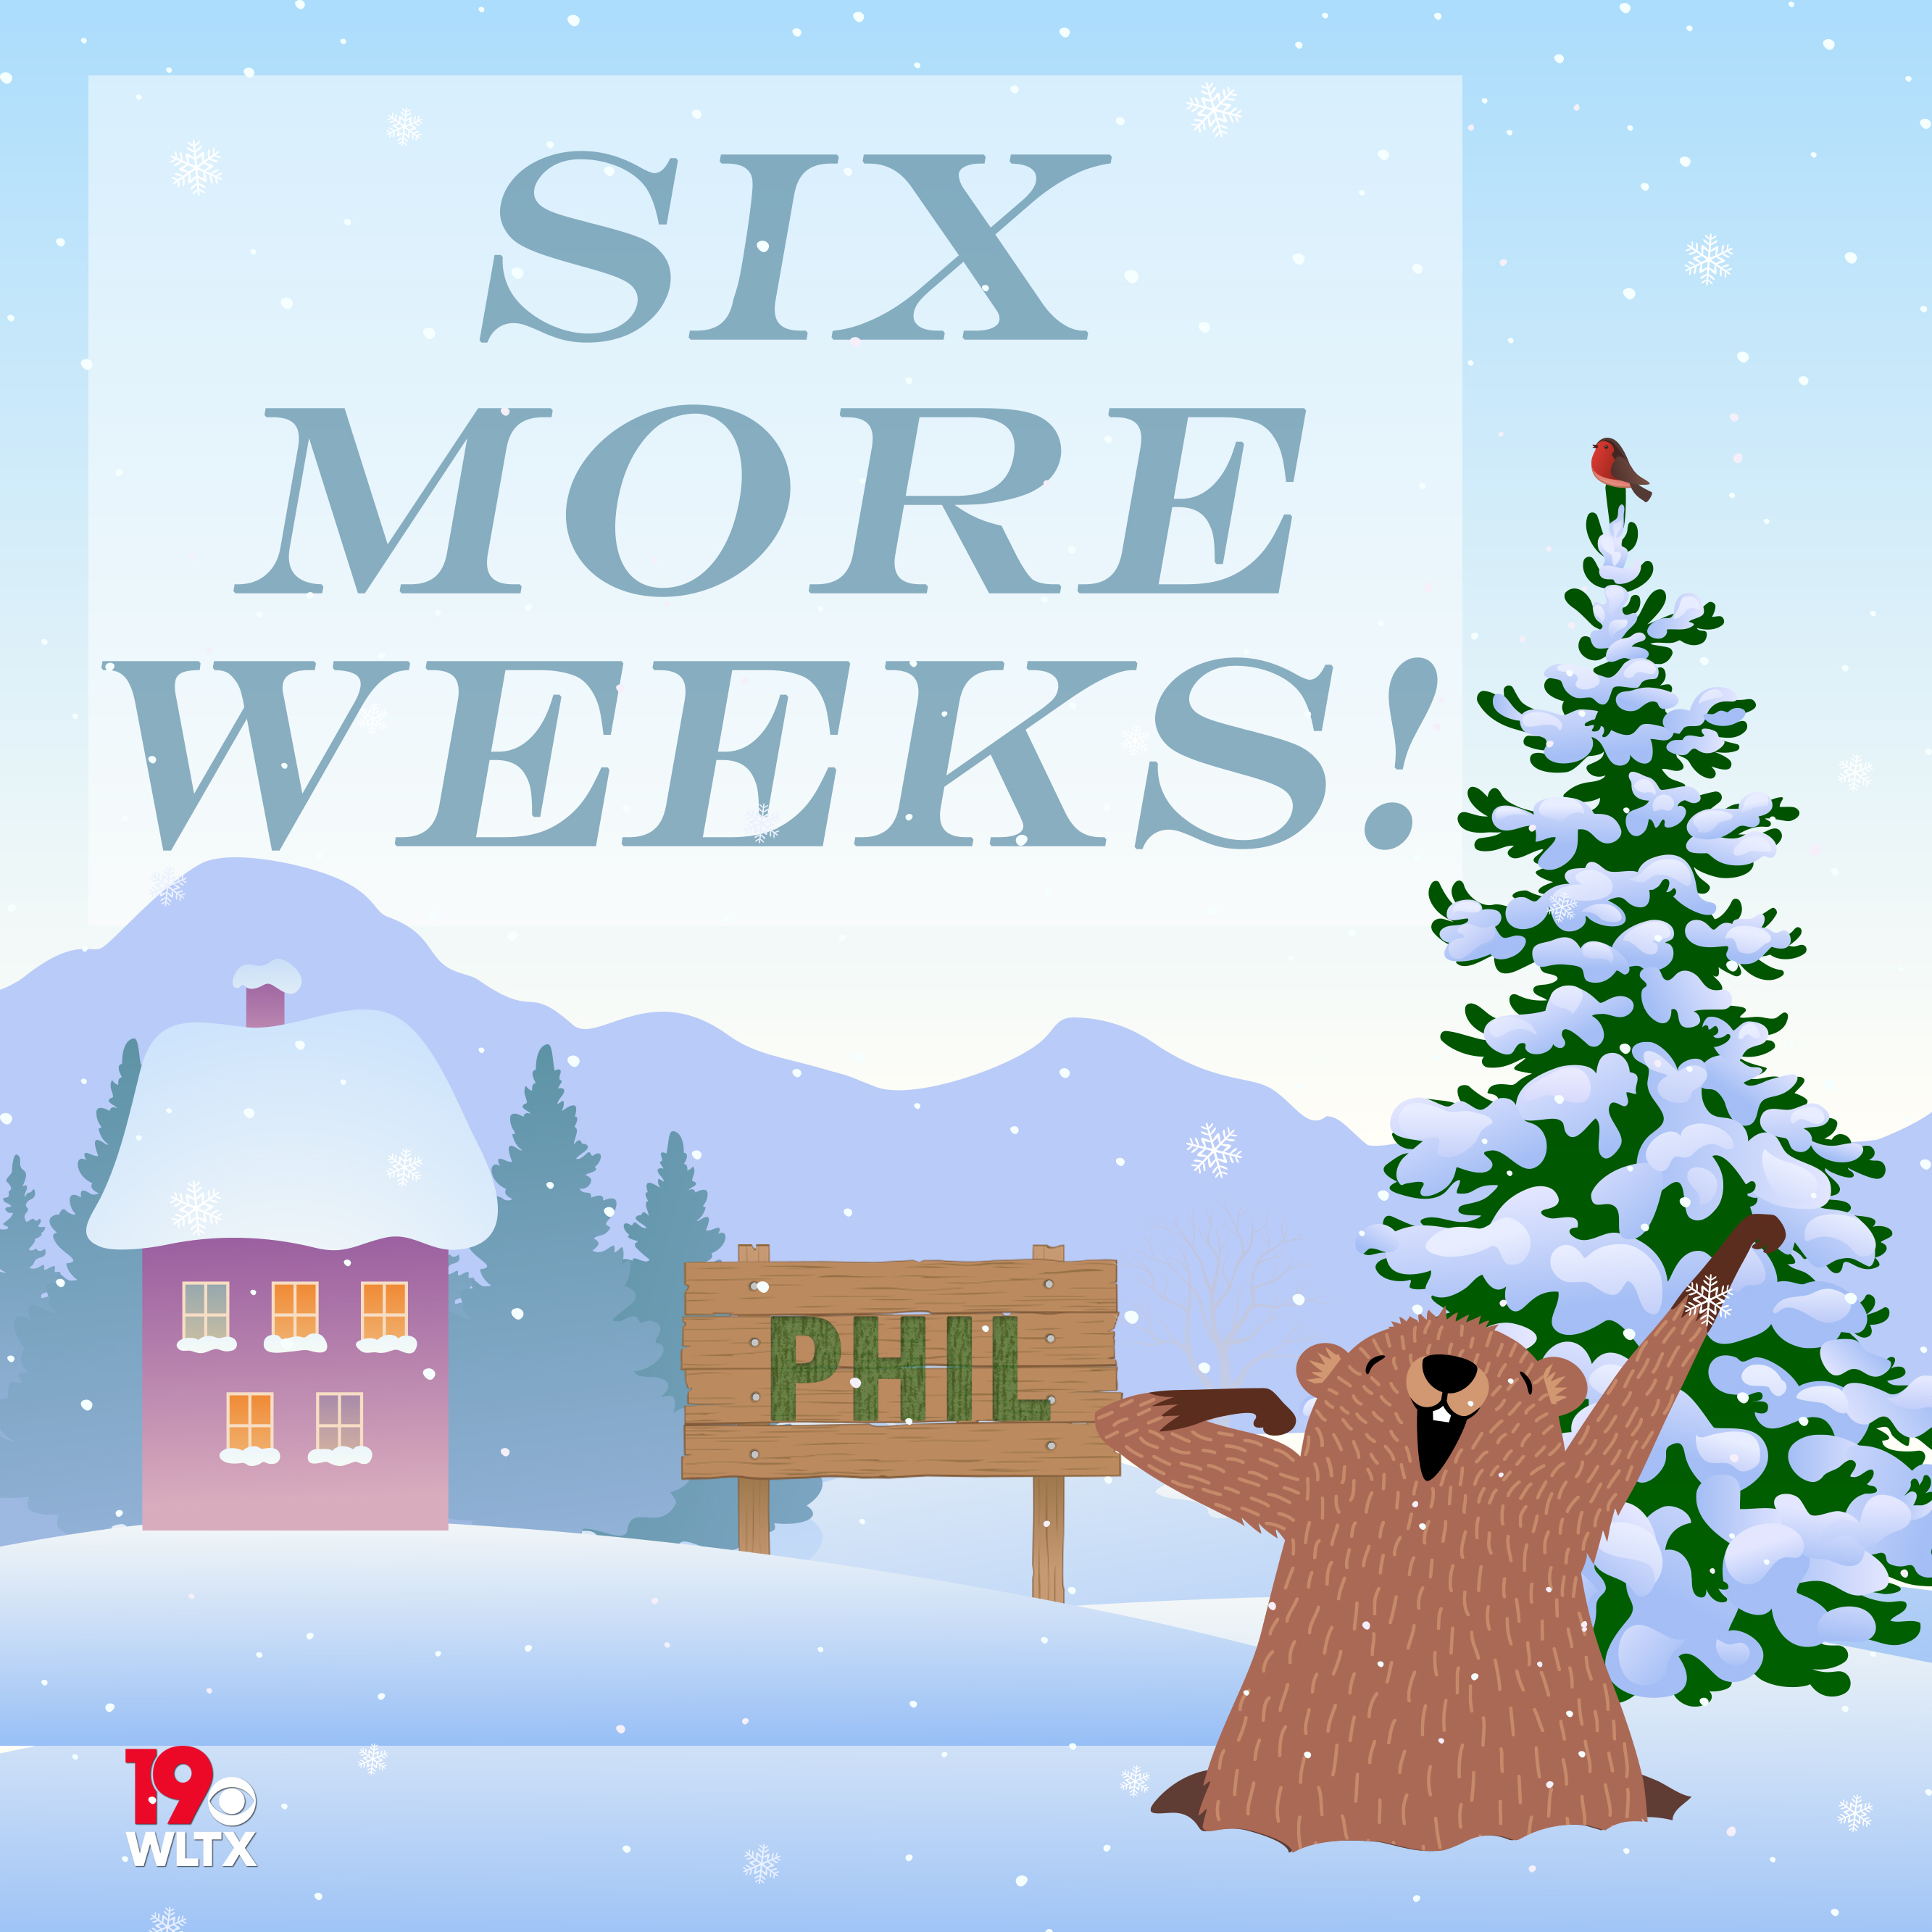 Groundhog Day Punxsutawney Phil predicts 6 more weeks of winter